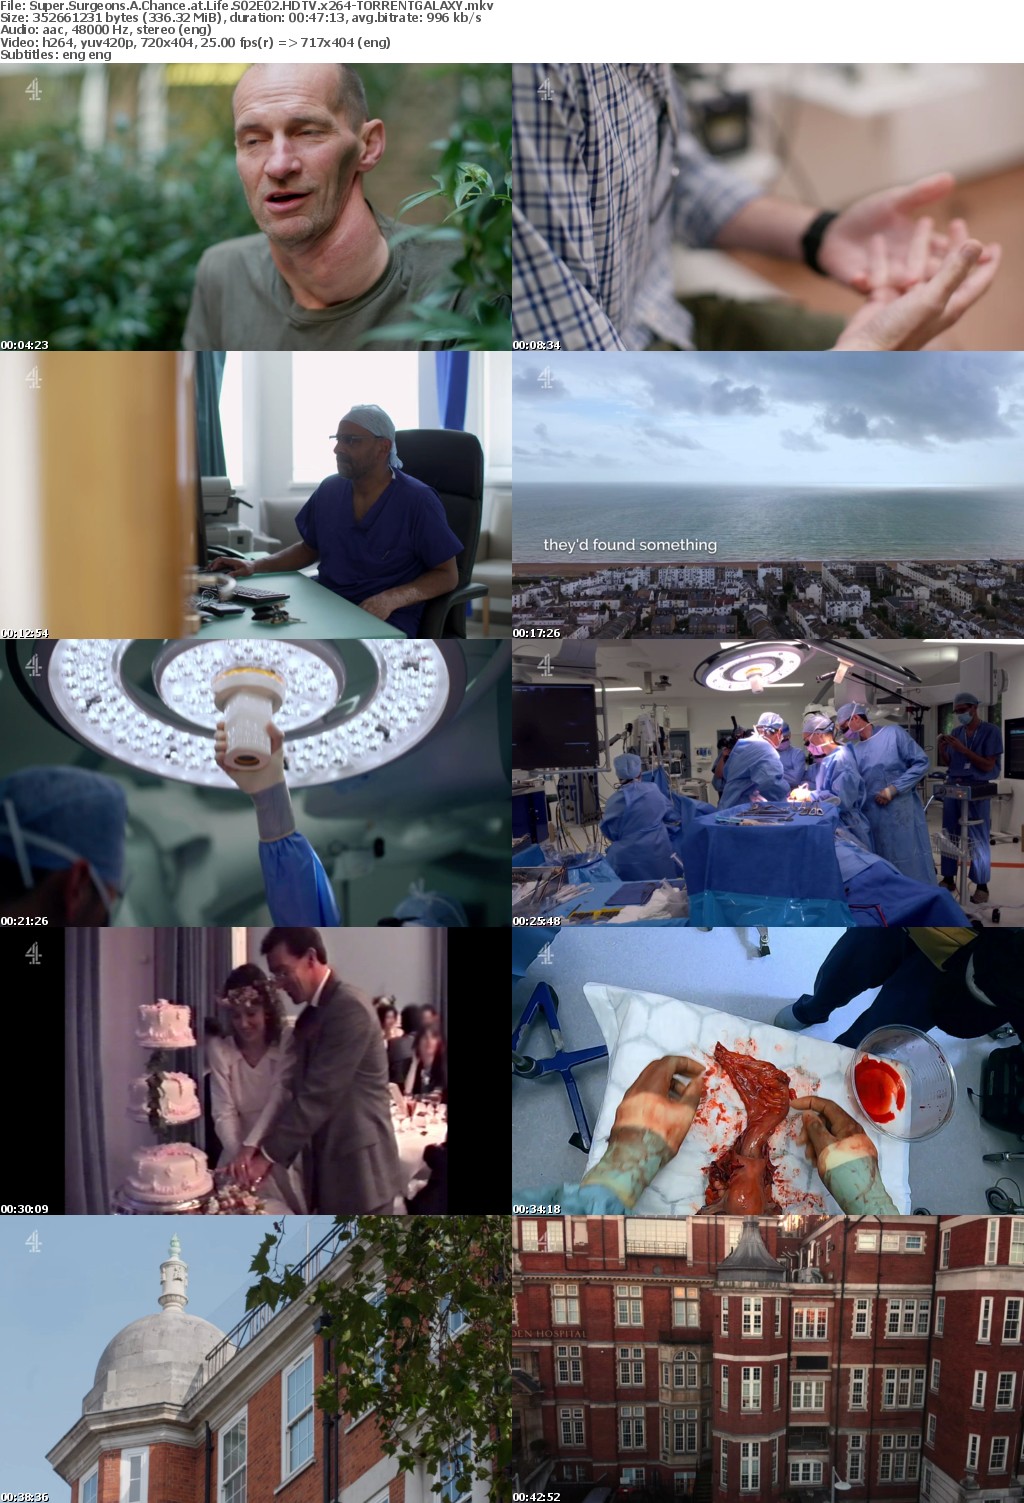 Super Surgeons A Chance at Life S02E02 HDTV x264-GALAXY